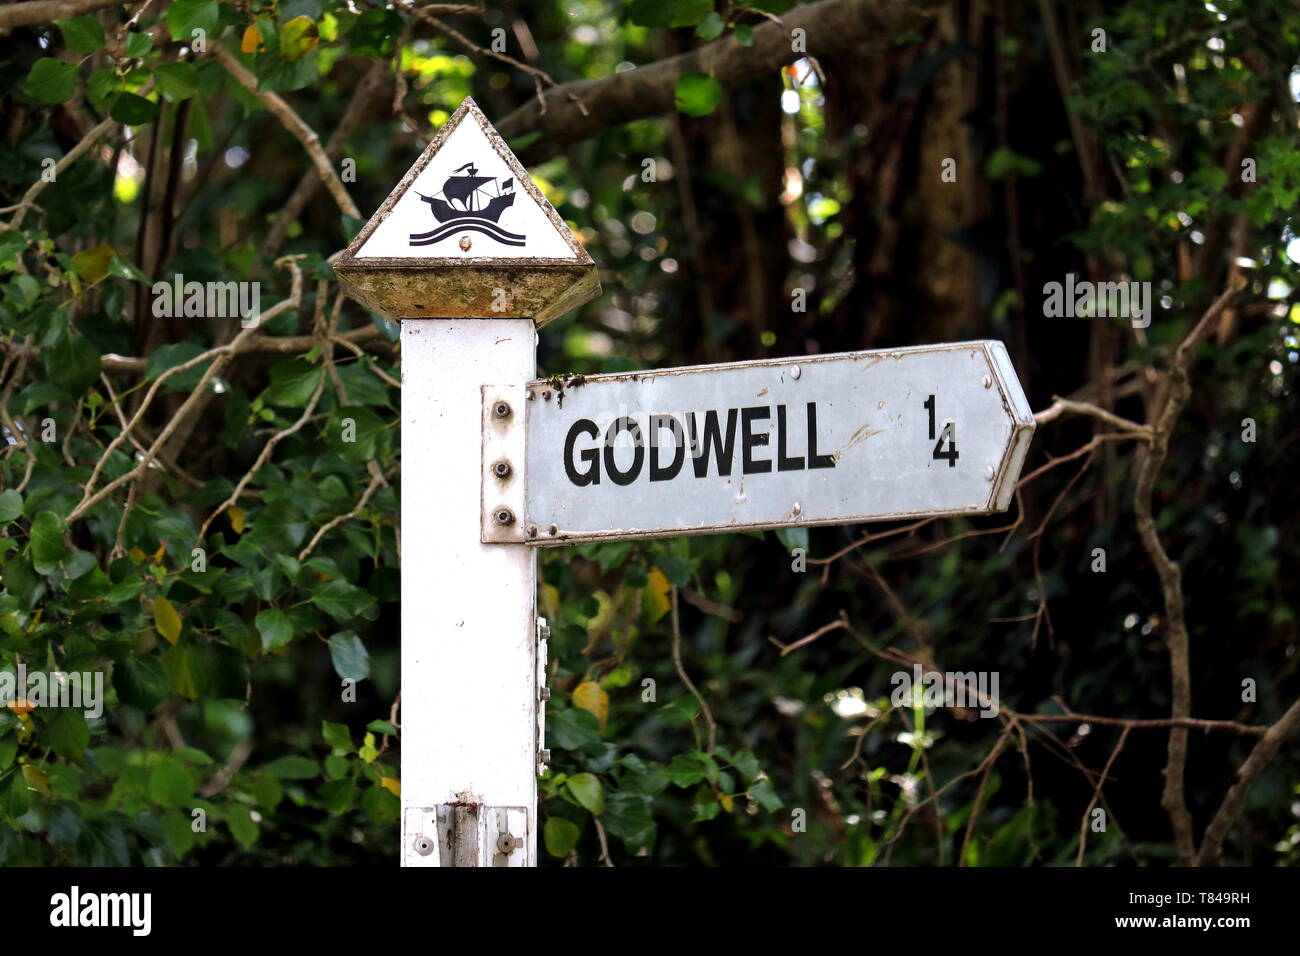 Godwell Village Sign, Pointing down Godwell Lane, Filham Area of Ivybridge, South Hams, Devon, SW England Stock Photo